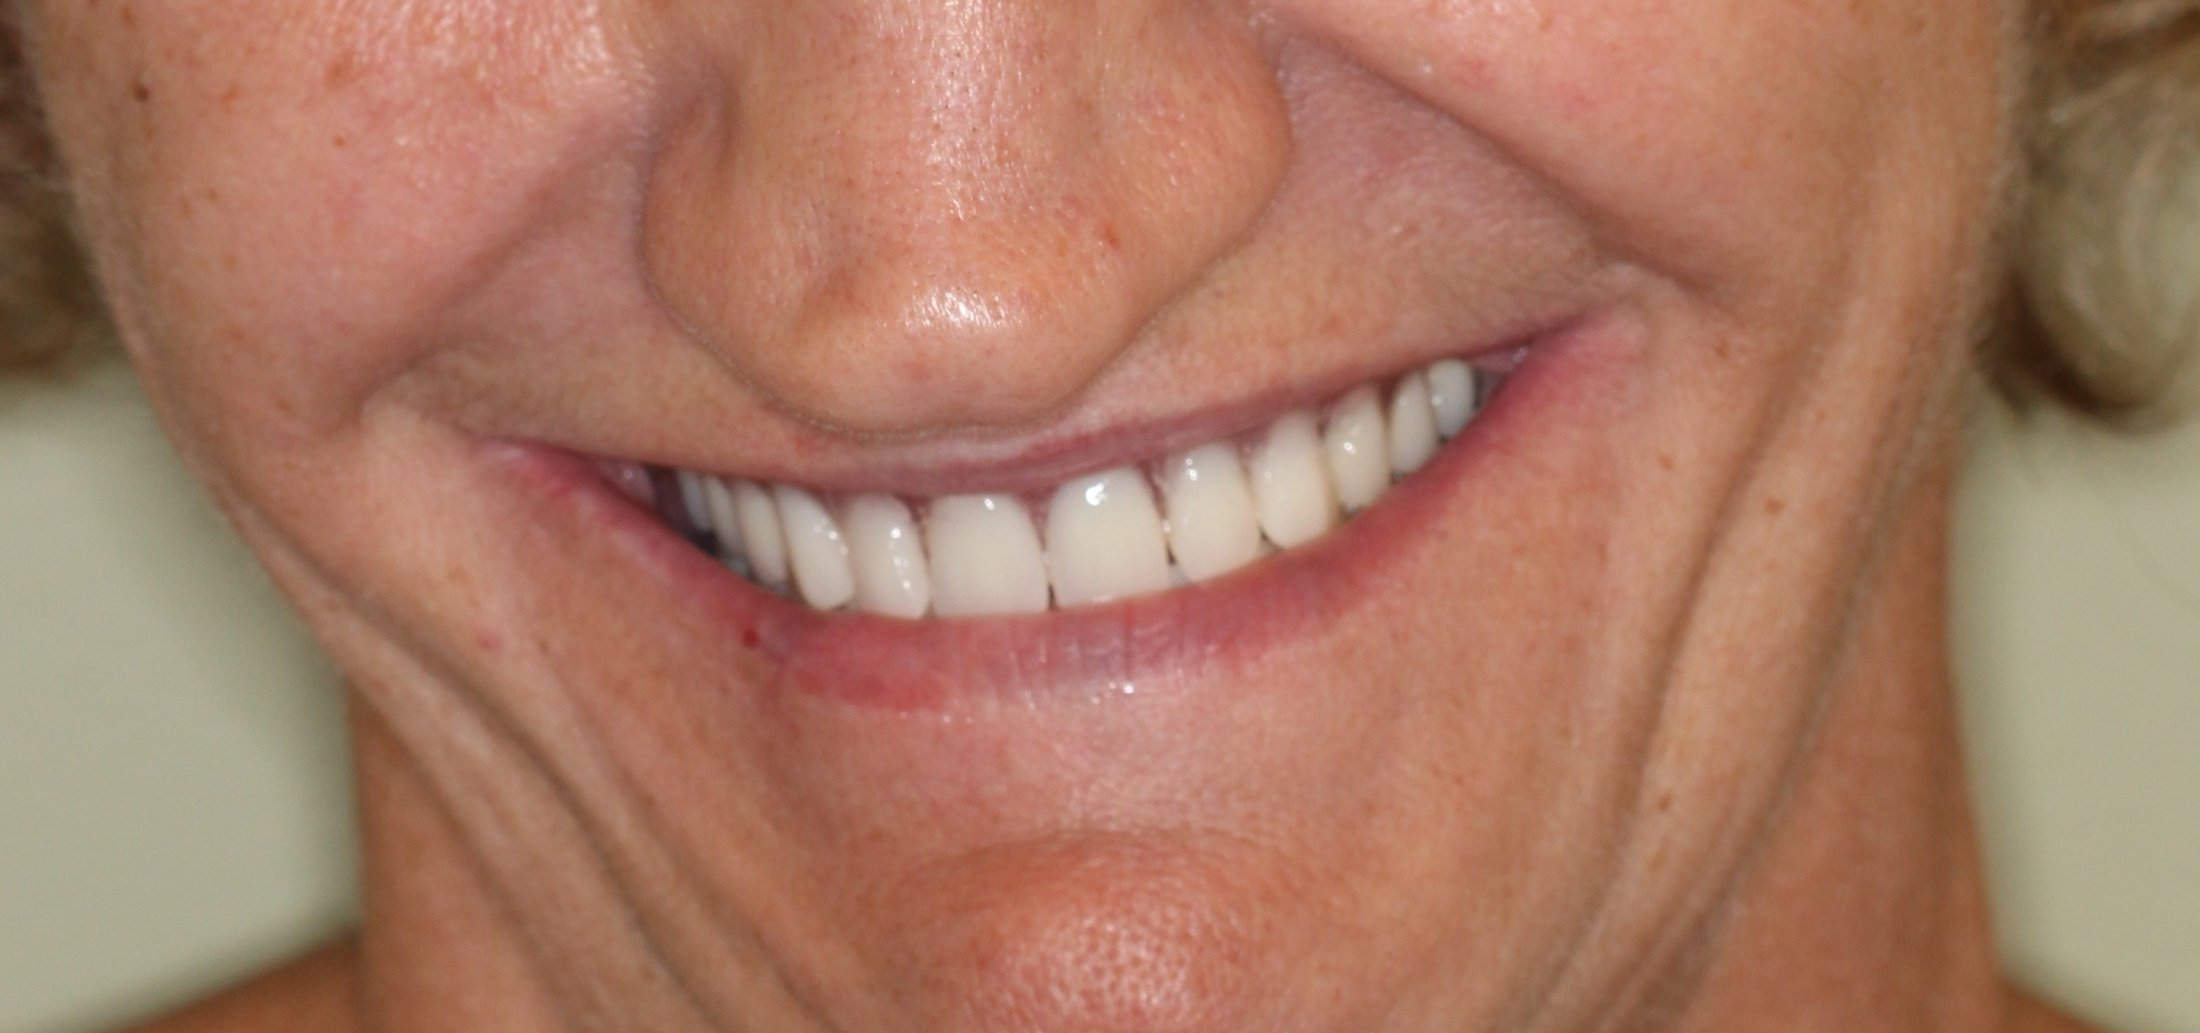 Patient's smile after dental treatment